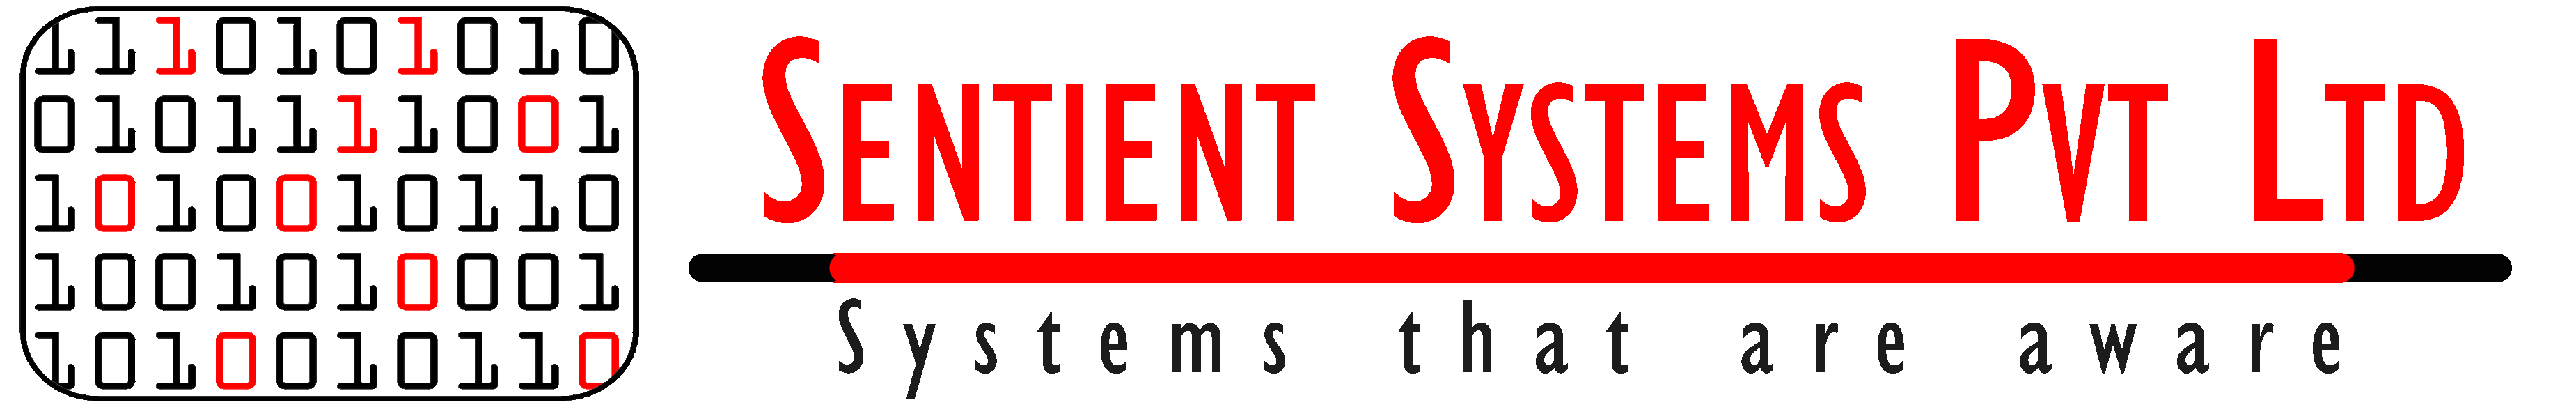 Sentient Systems Pvt. Ltd.